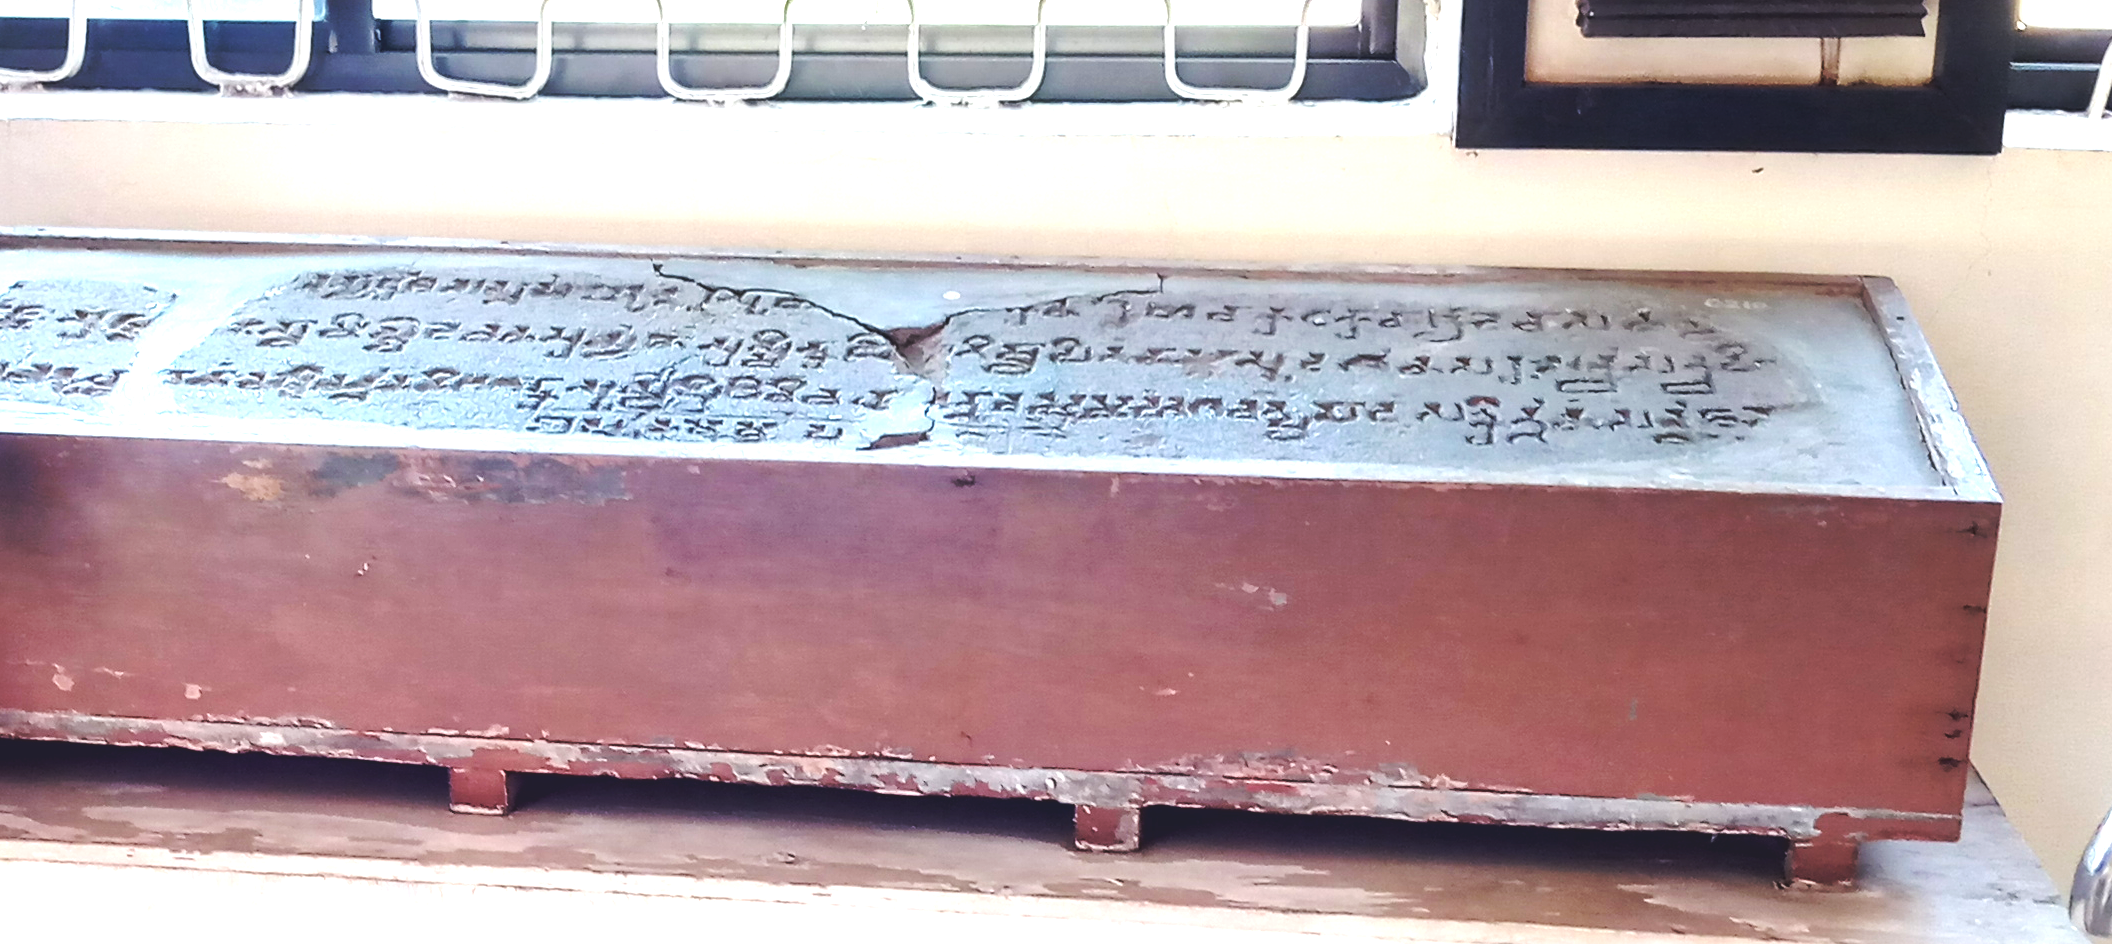 Hisse Borala inscription in the Nagpur Museum